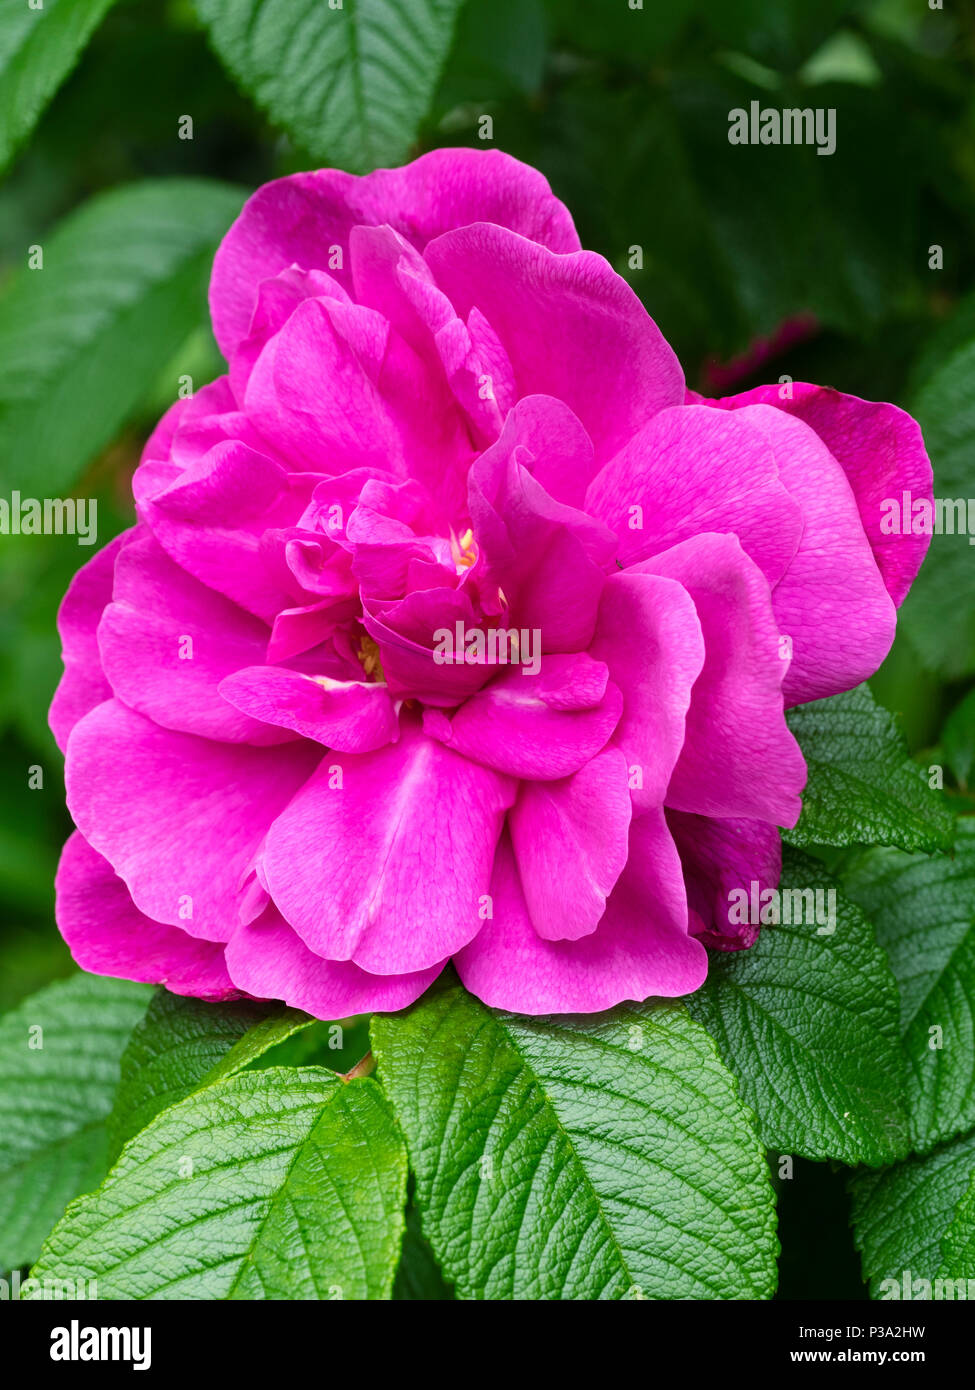 Bright pink magenta double flowers of the fragant hardy shrub rose, Rosa rugosa 'Hansa' Stock Photo